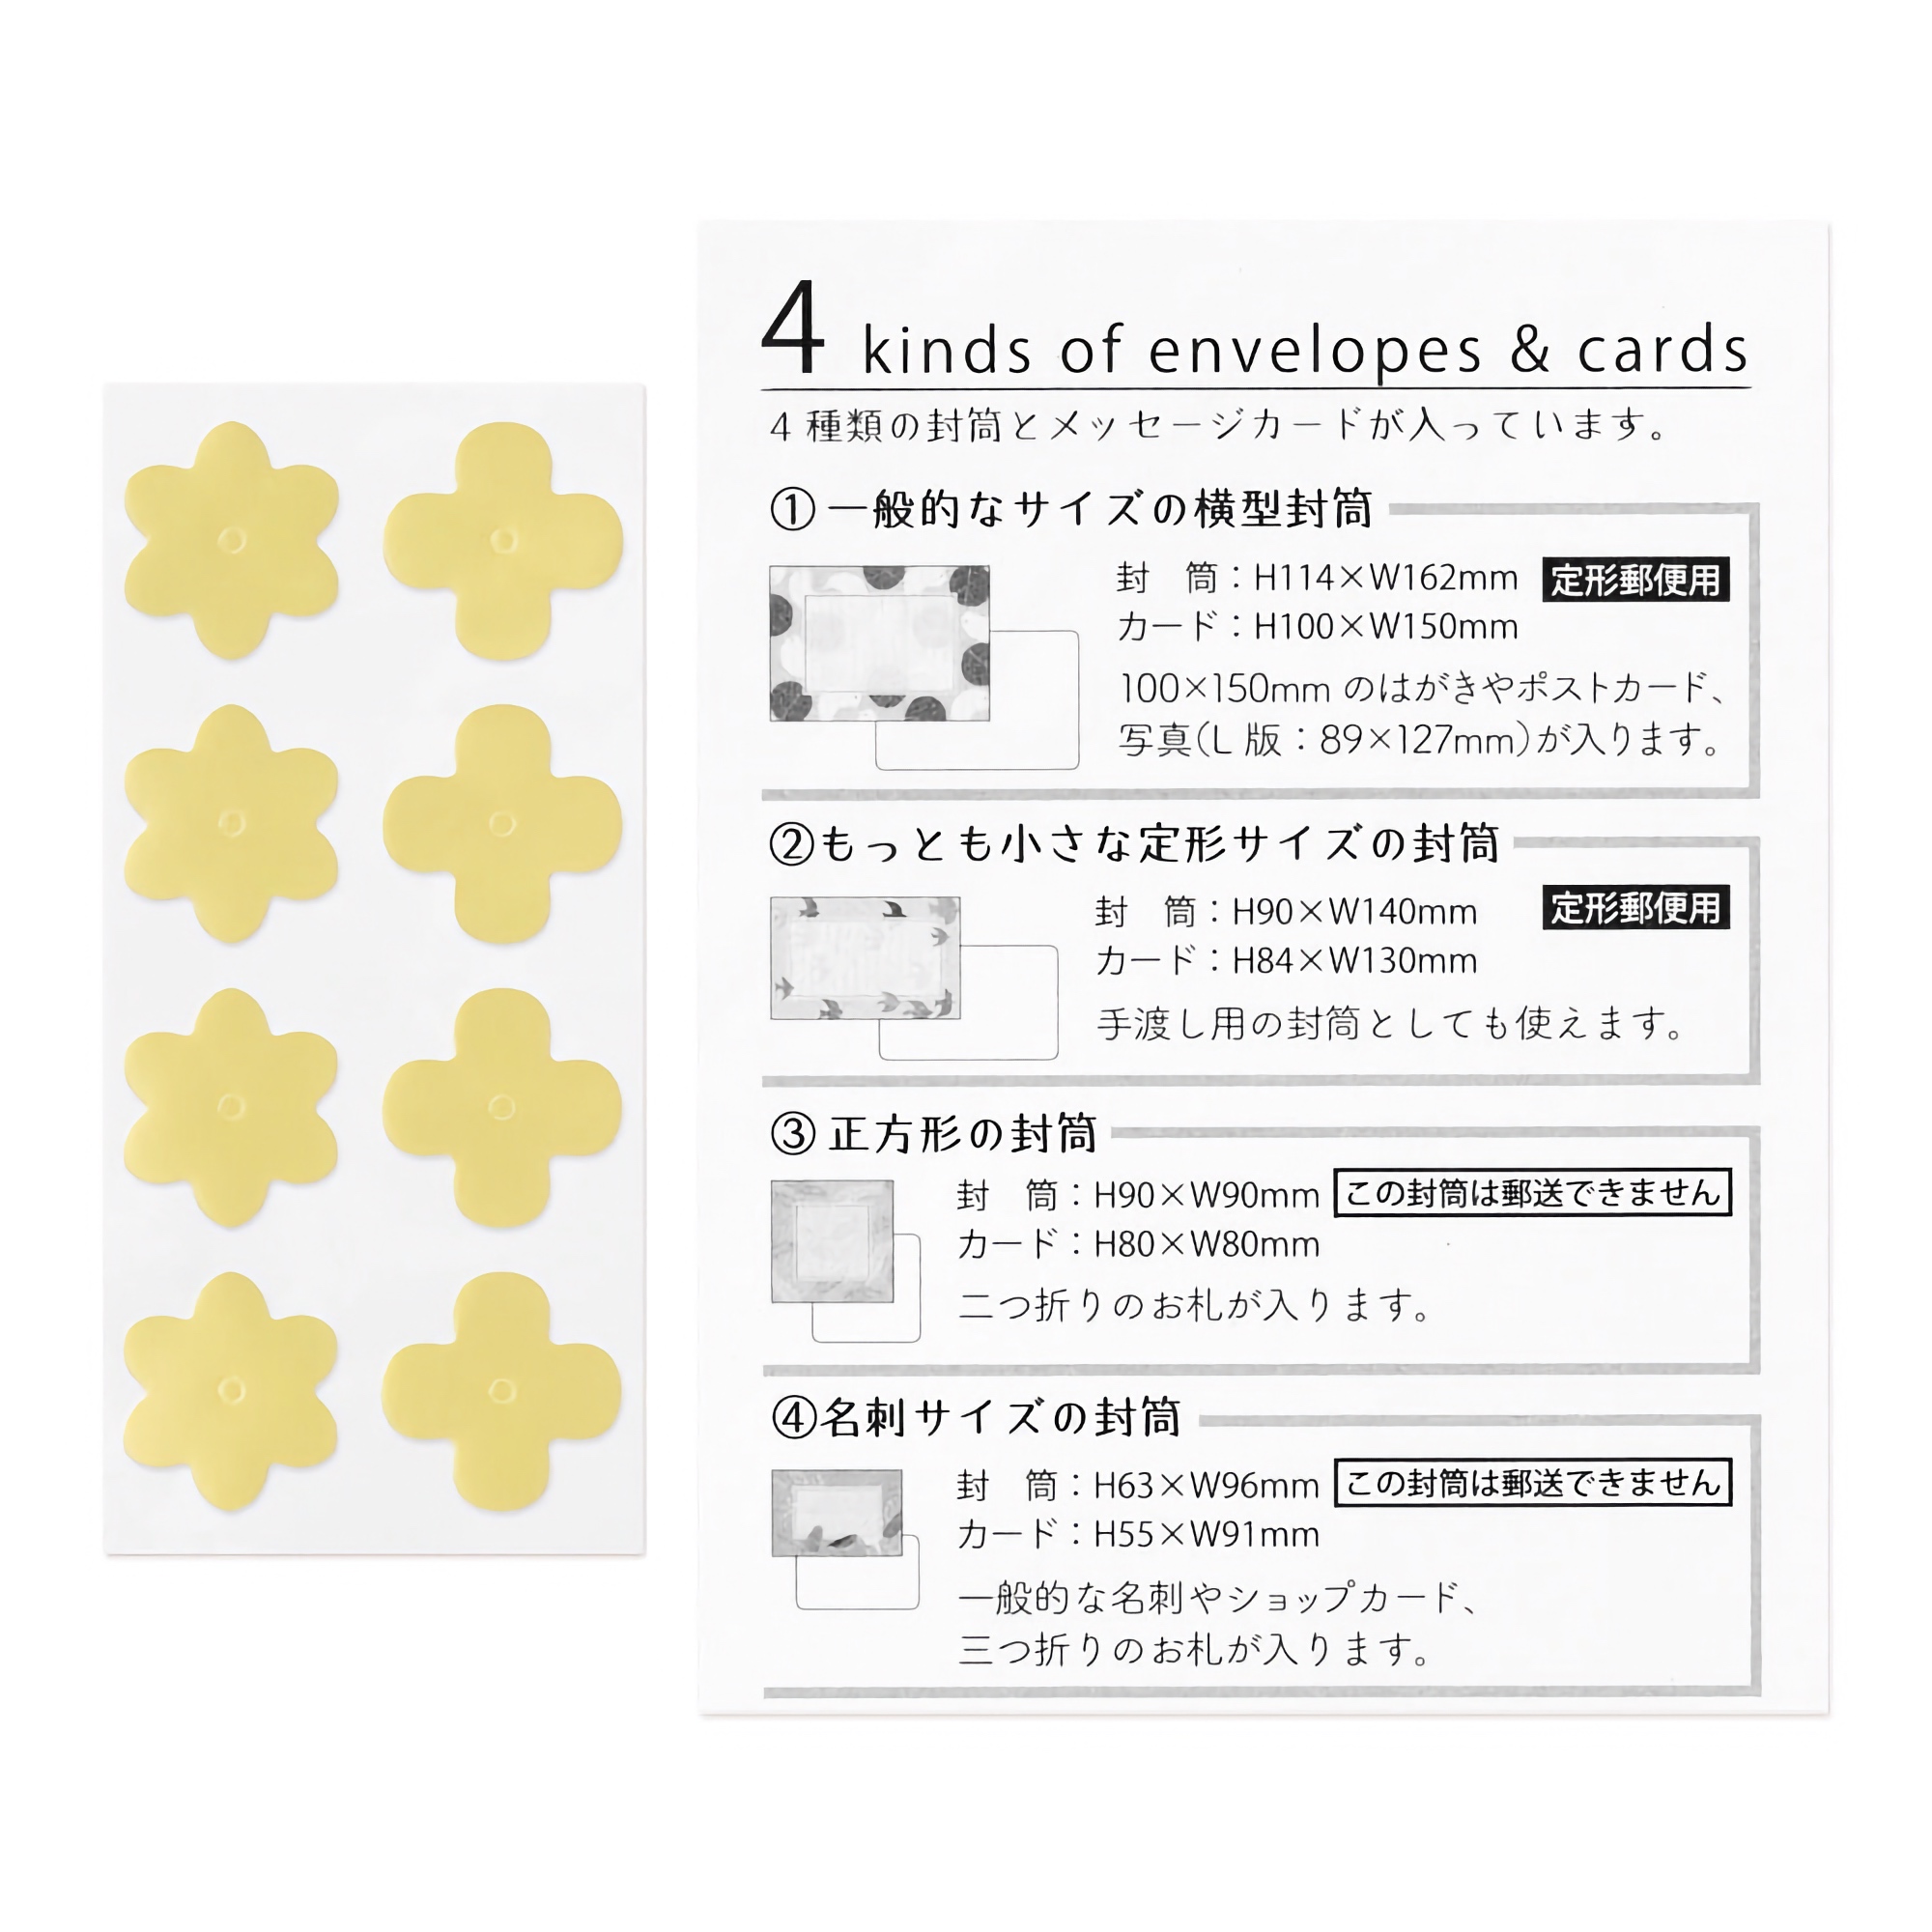 Midori Card Letter Set Multiple Packed Bird